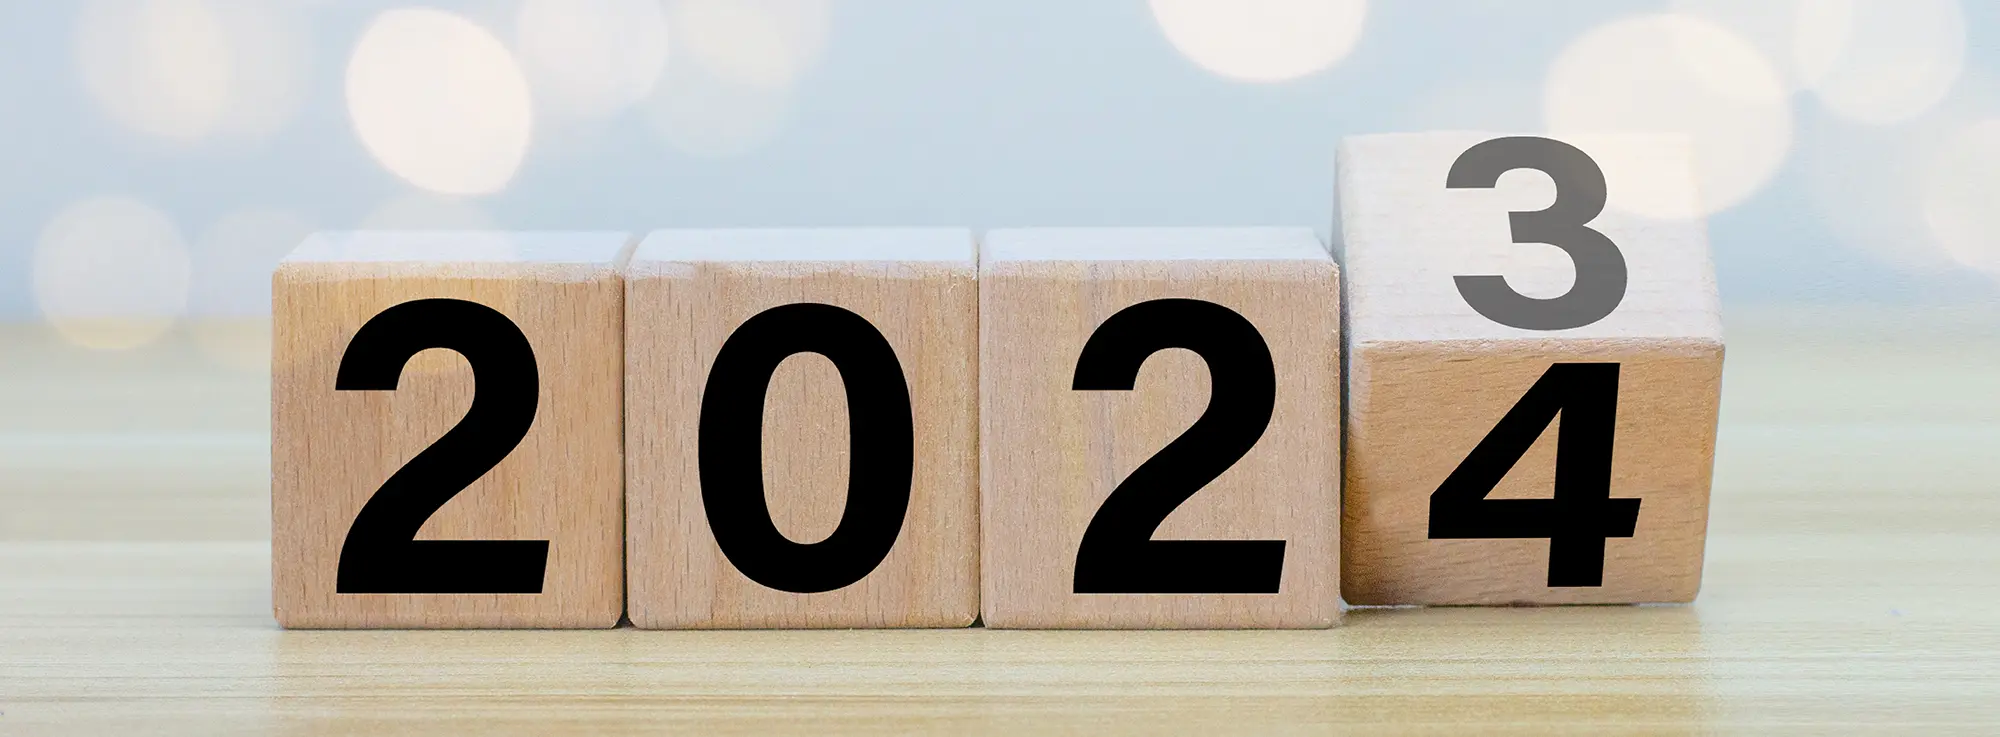 Top 5 Blog Posts of 2023